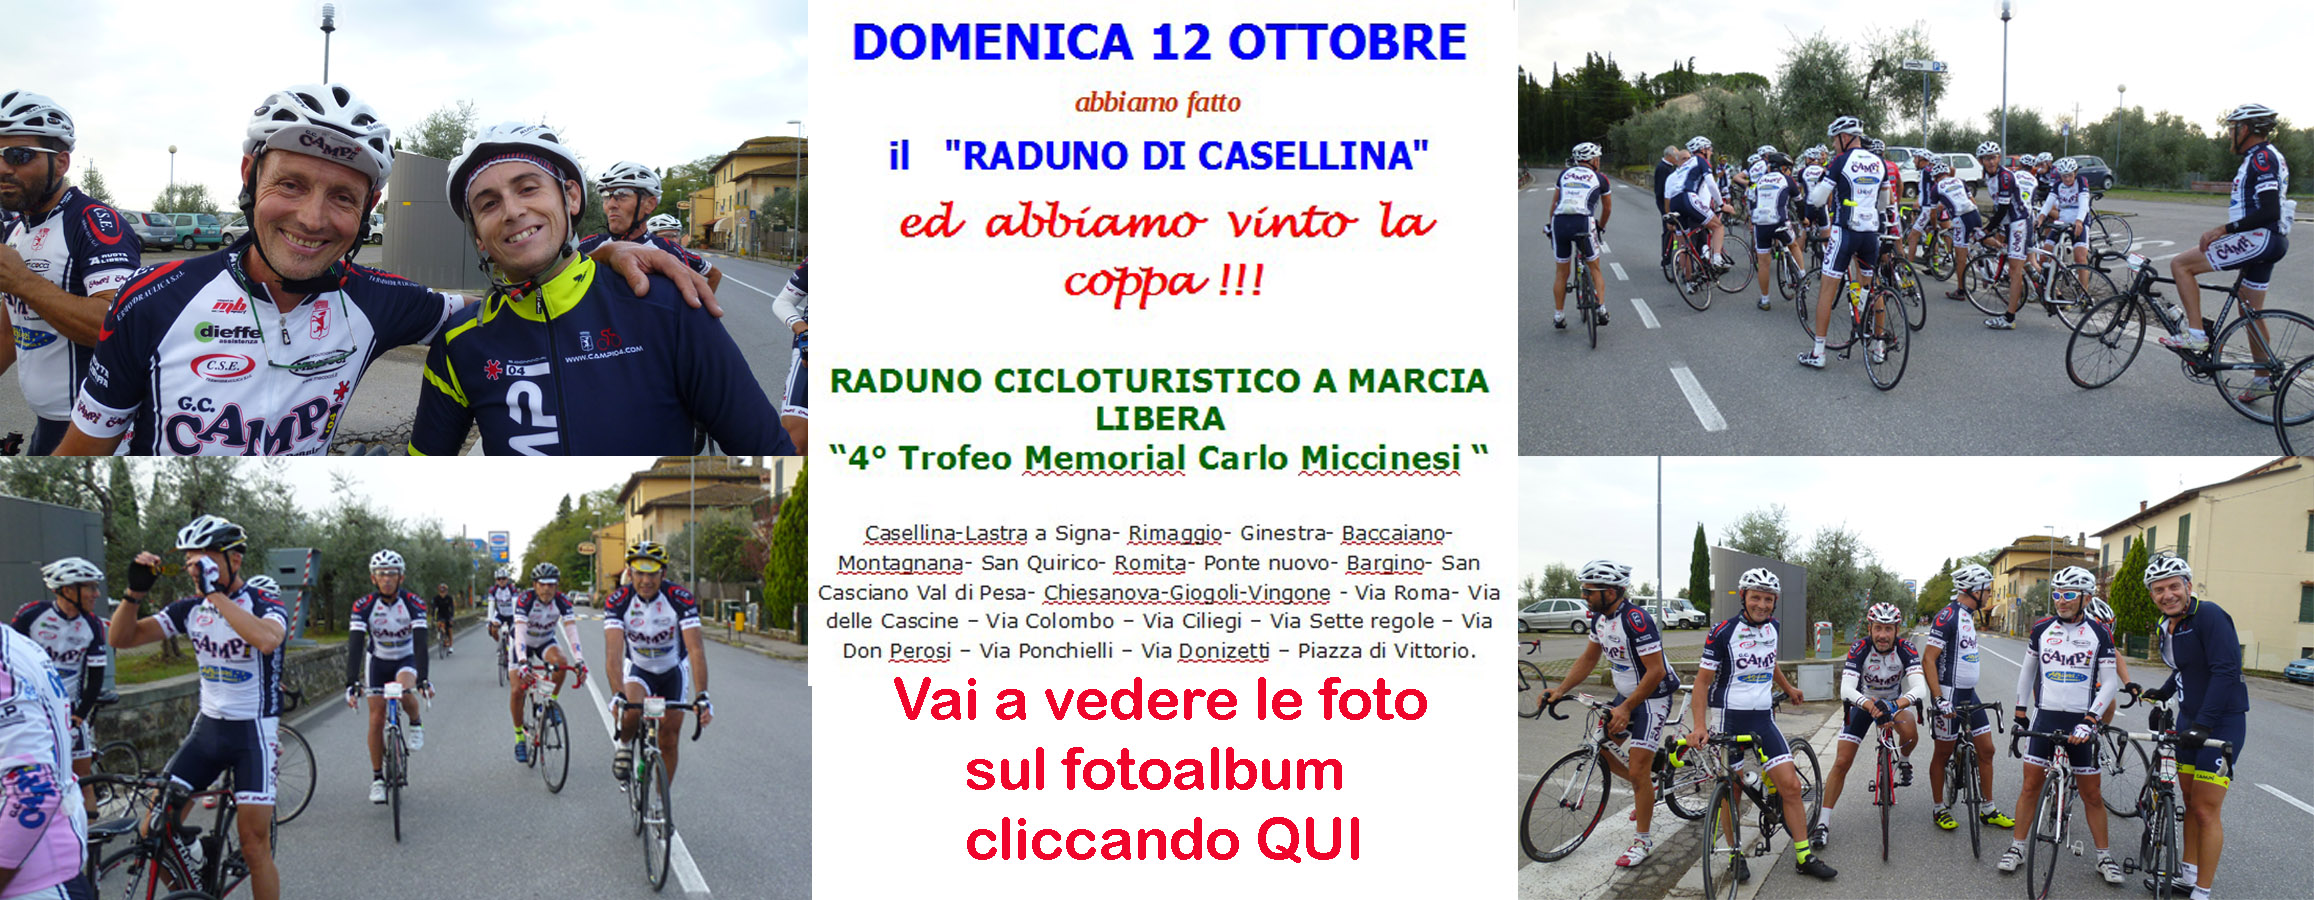 Banner Raduno Casellina